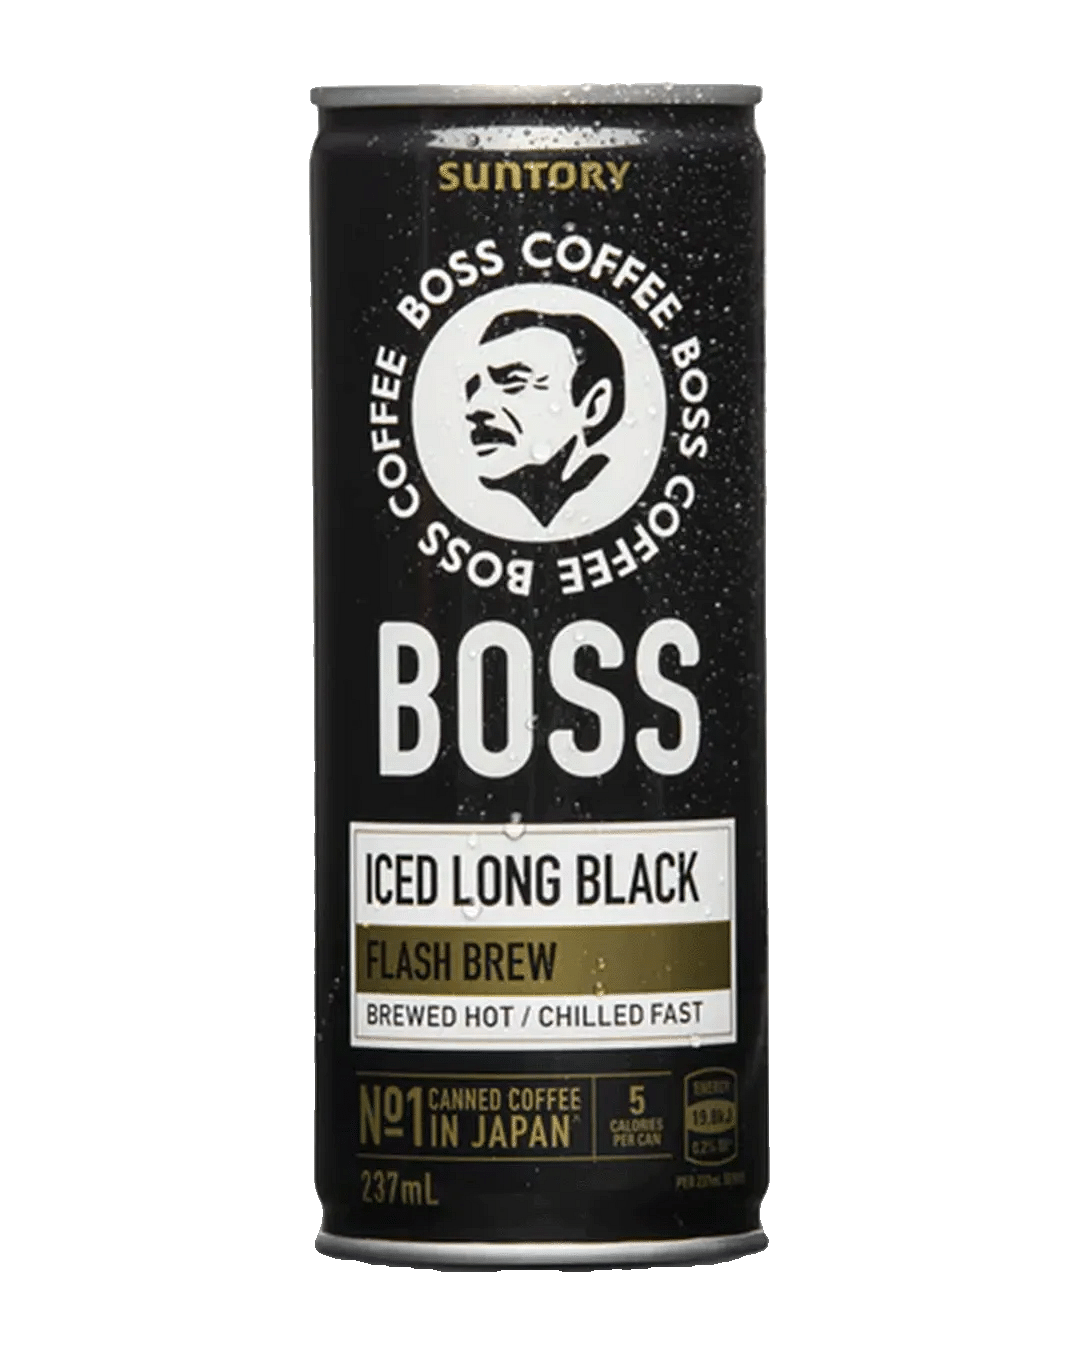 Suntory Boss Coffee Iced Long Black